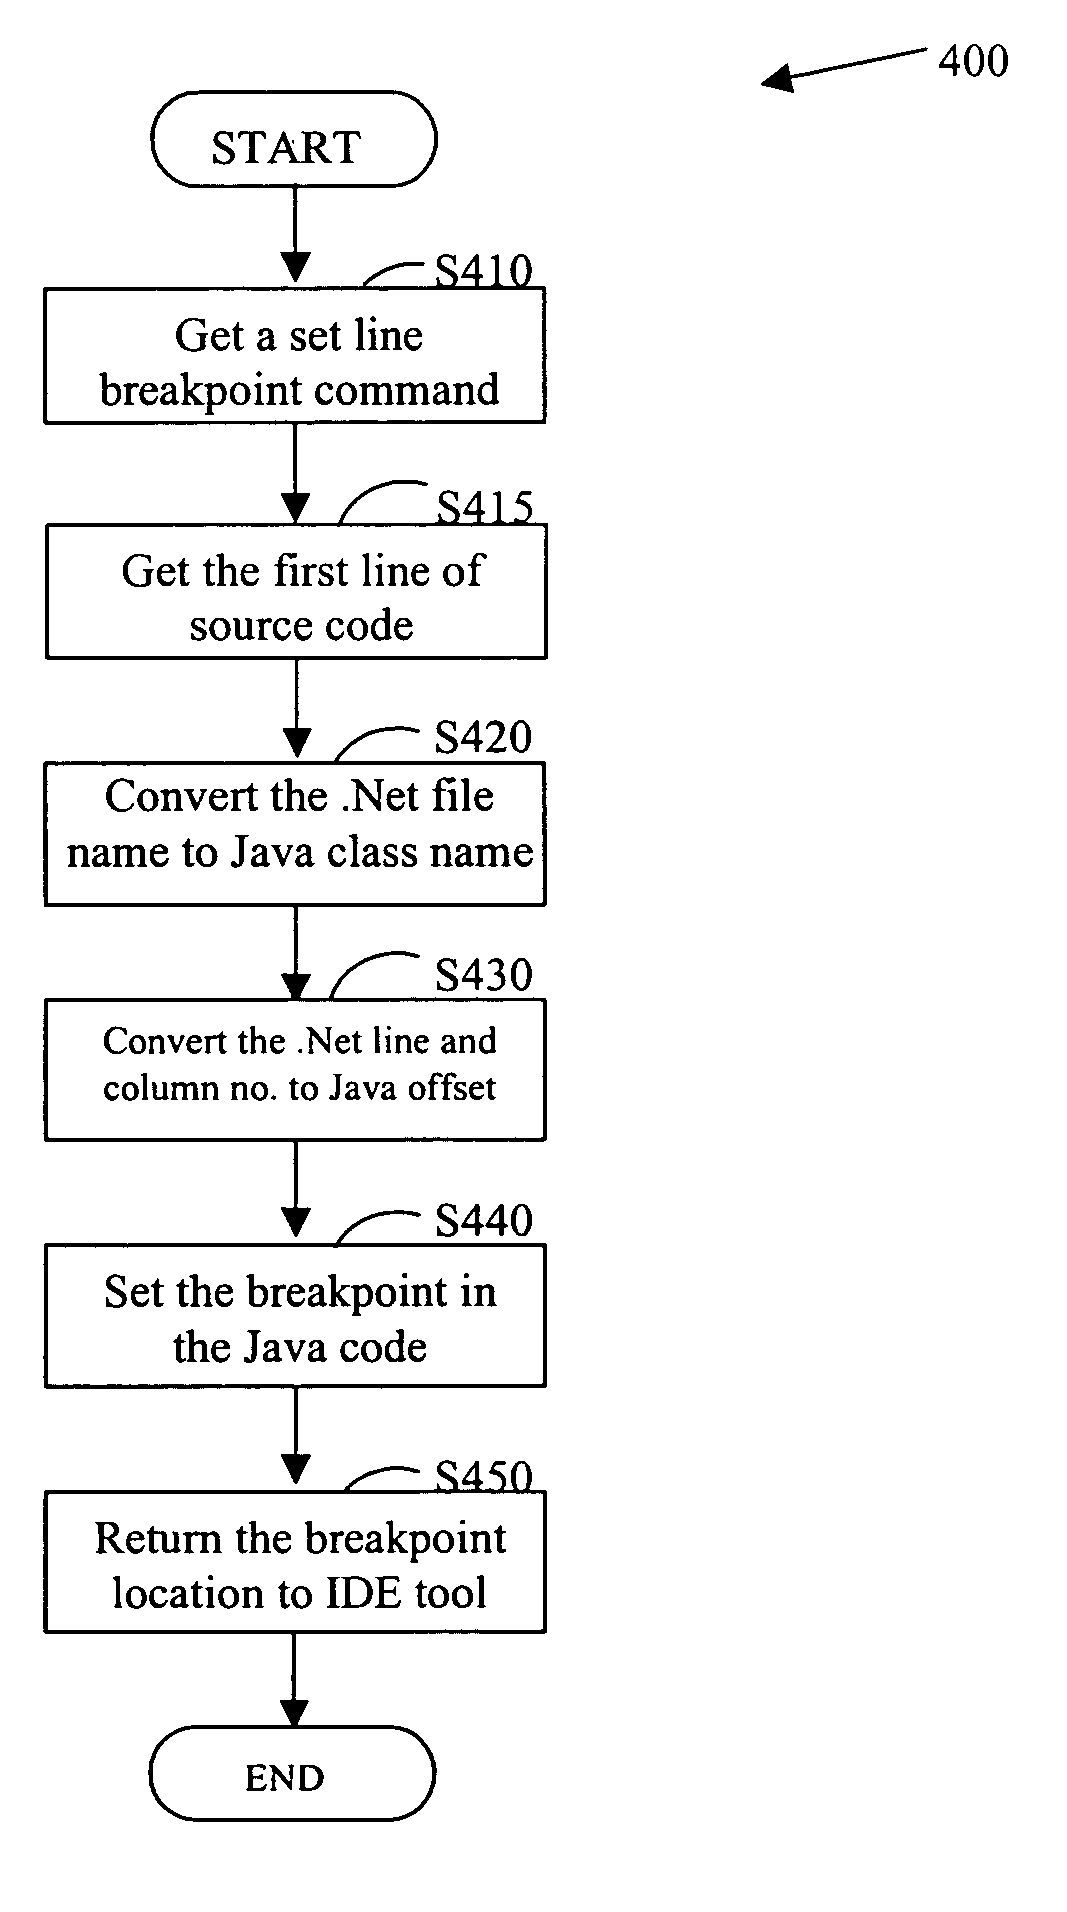 Debugger and method for debugging computer programs across multiple programming languages